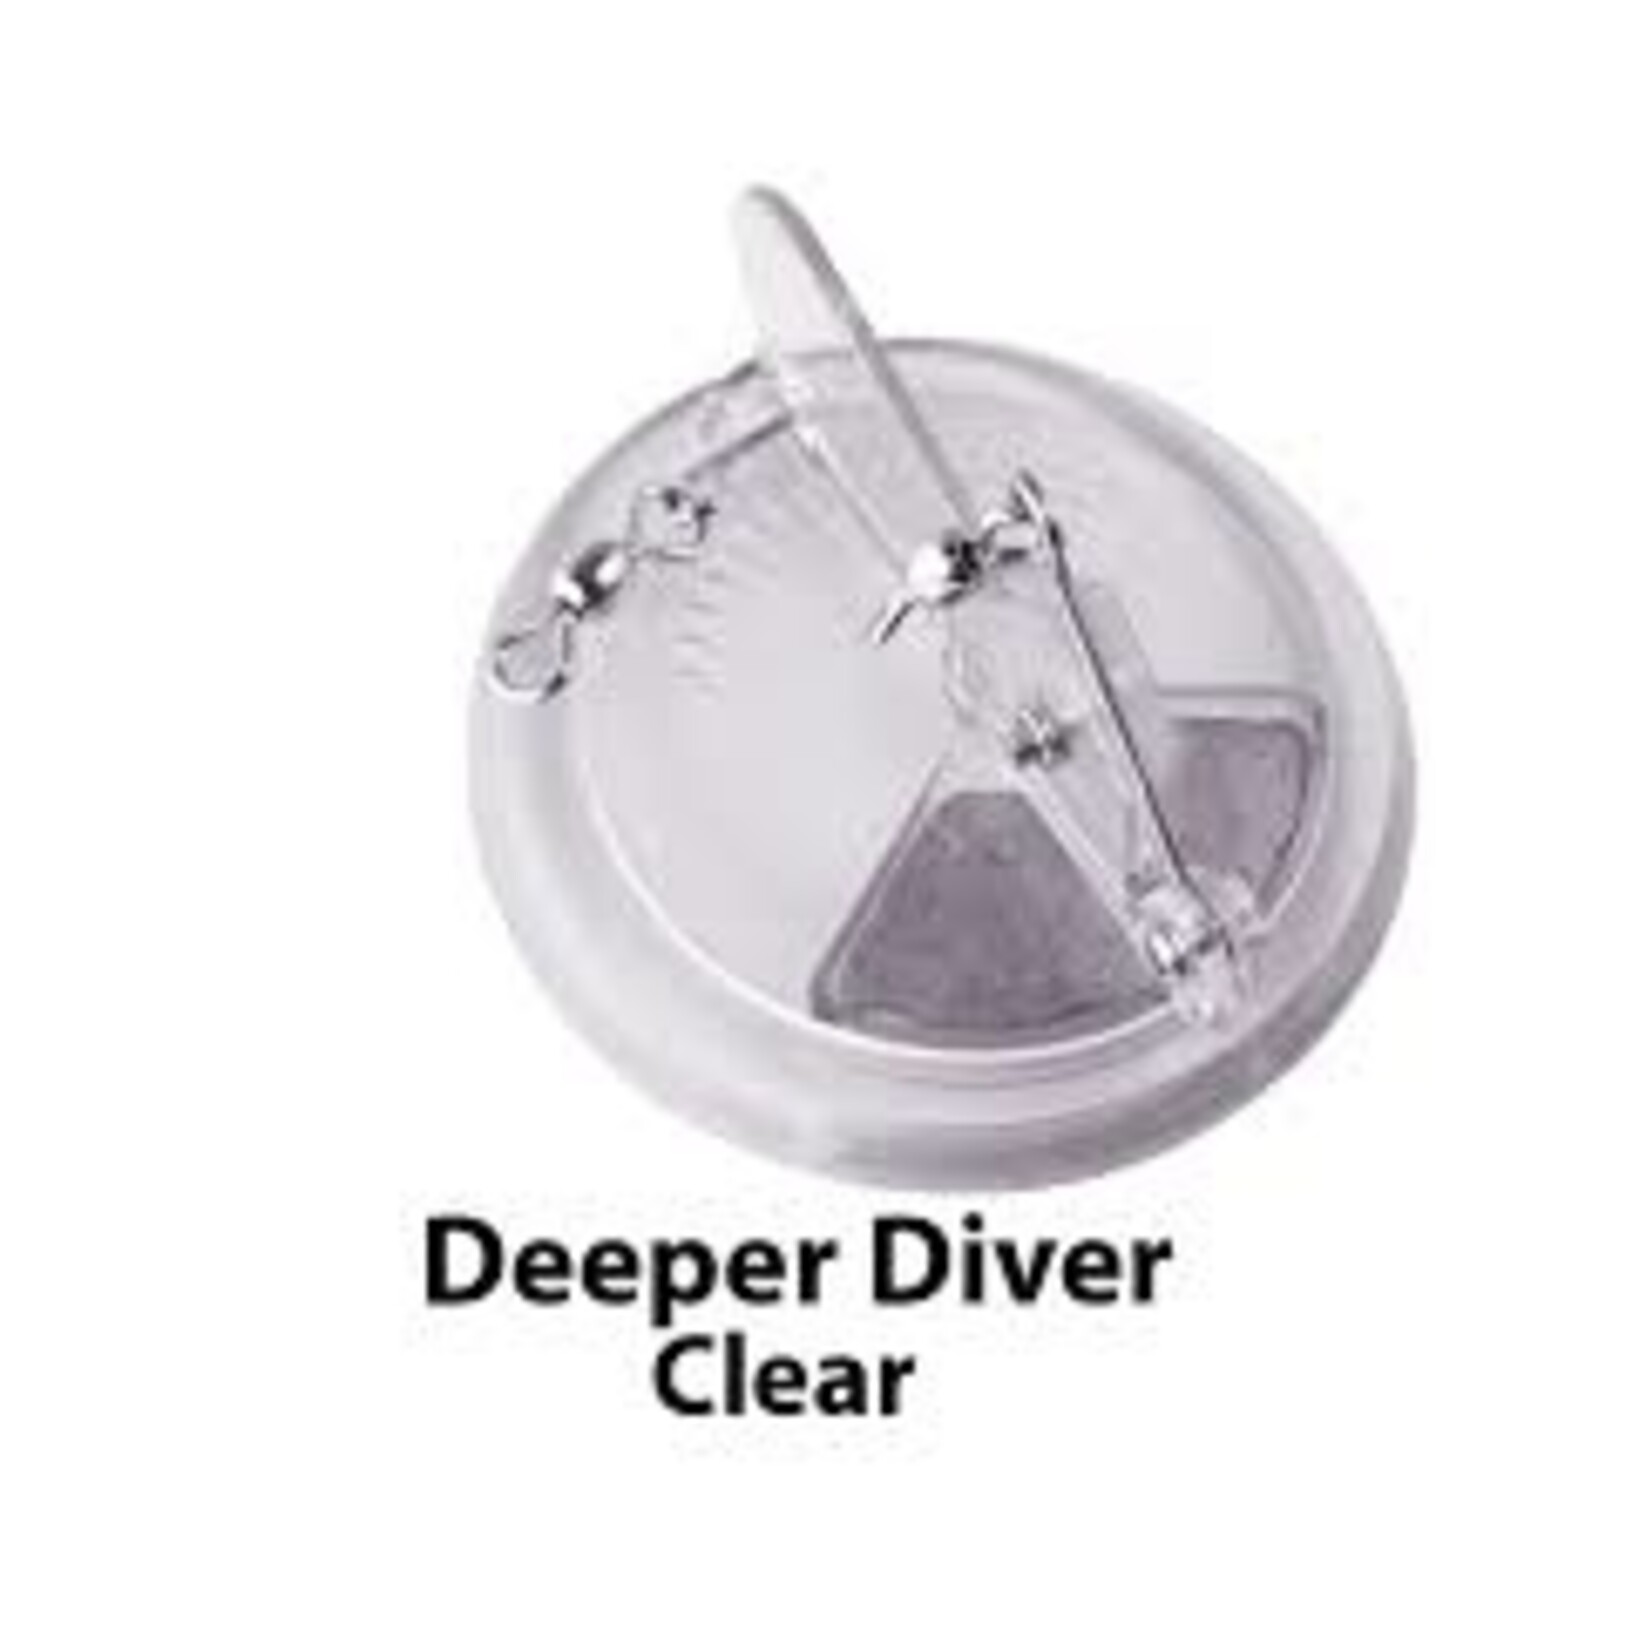 BRAND NEW Detachable Dipsy Diver Technique REVEALED (VERSION 4